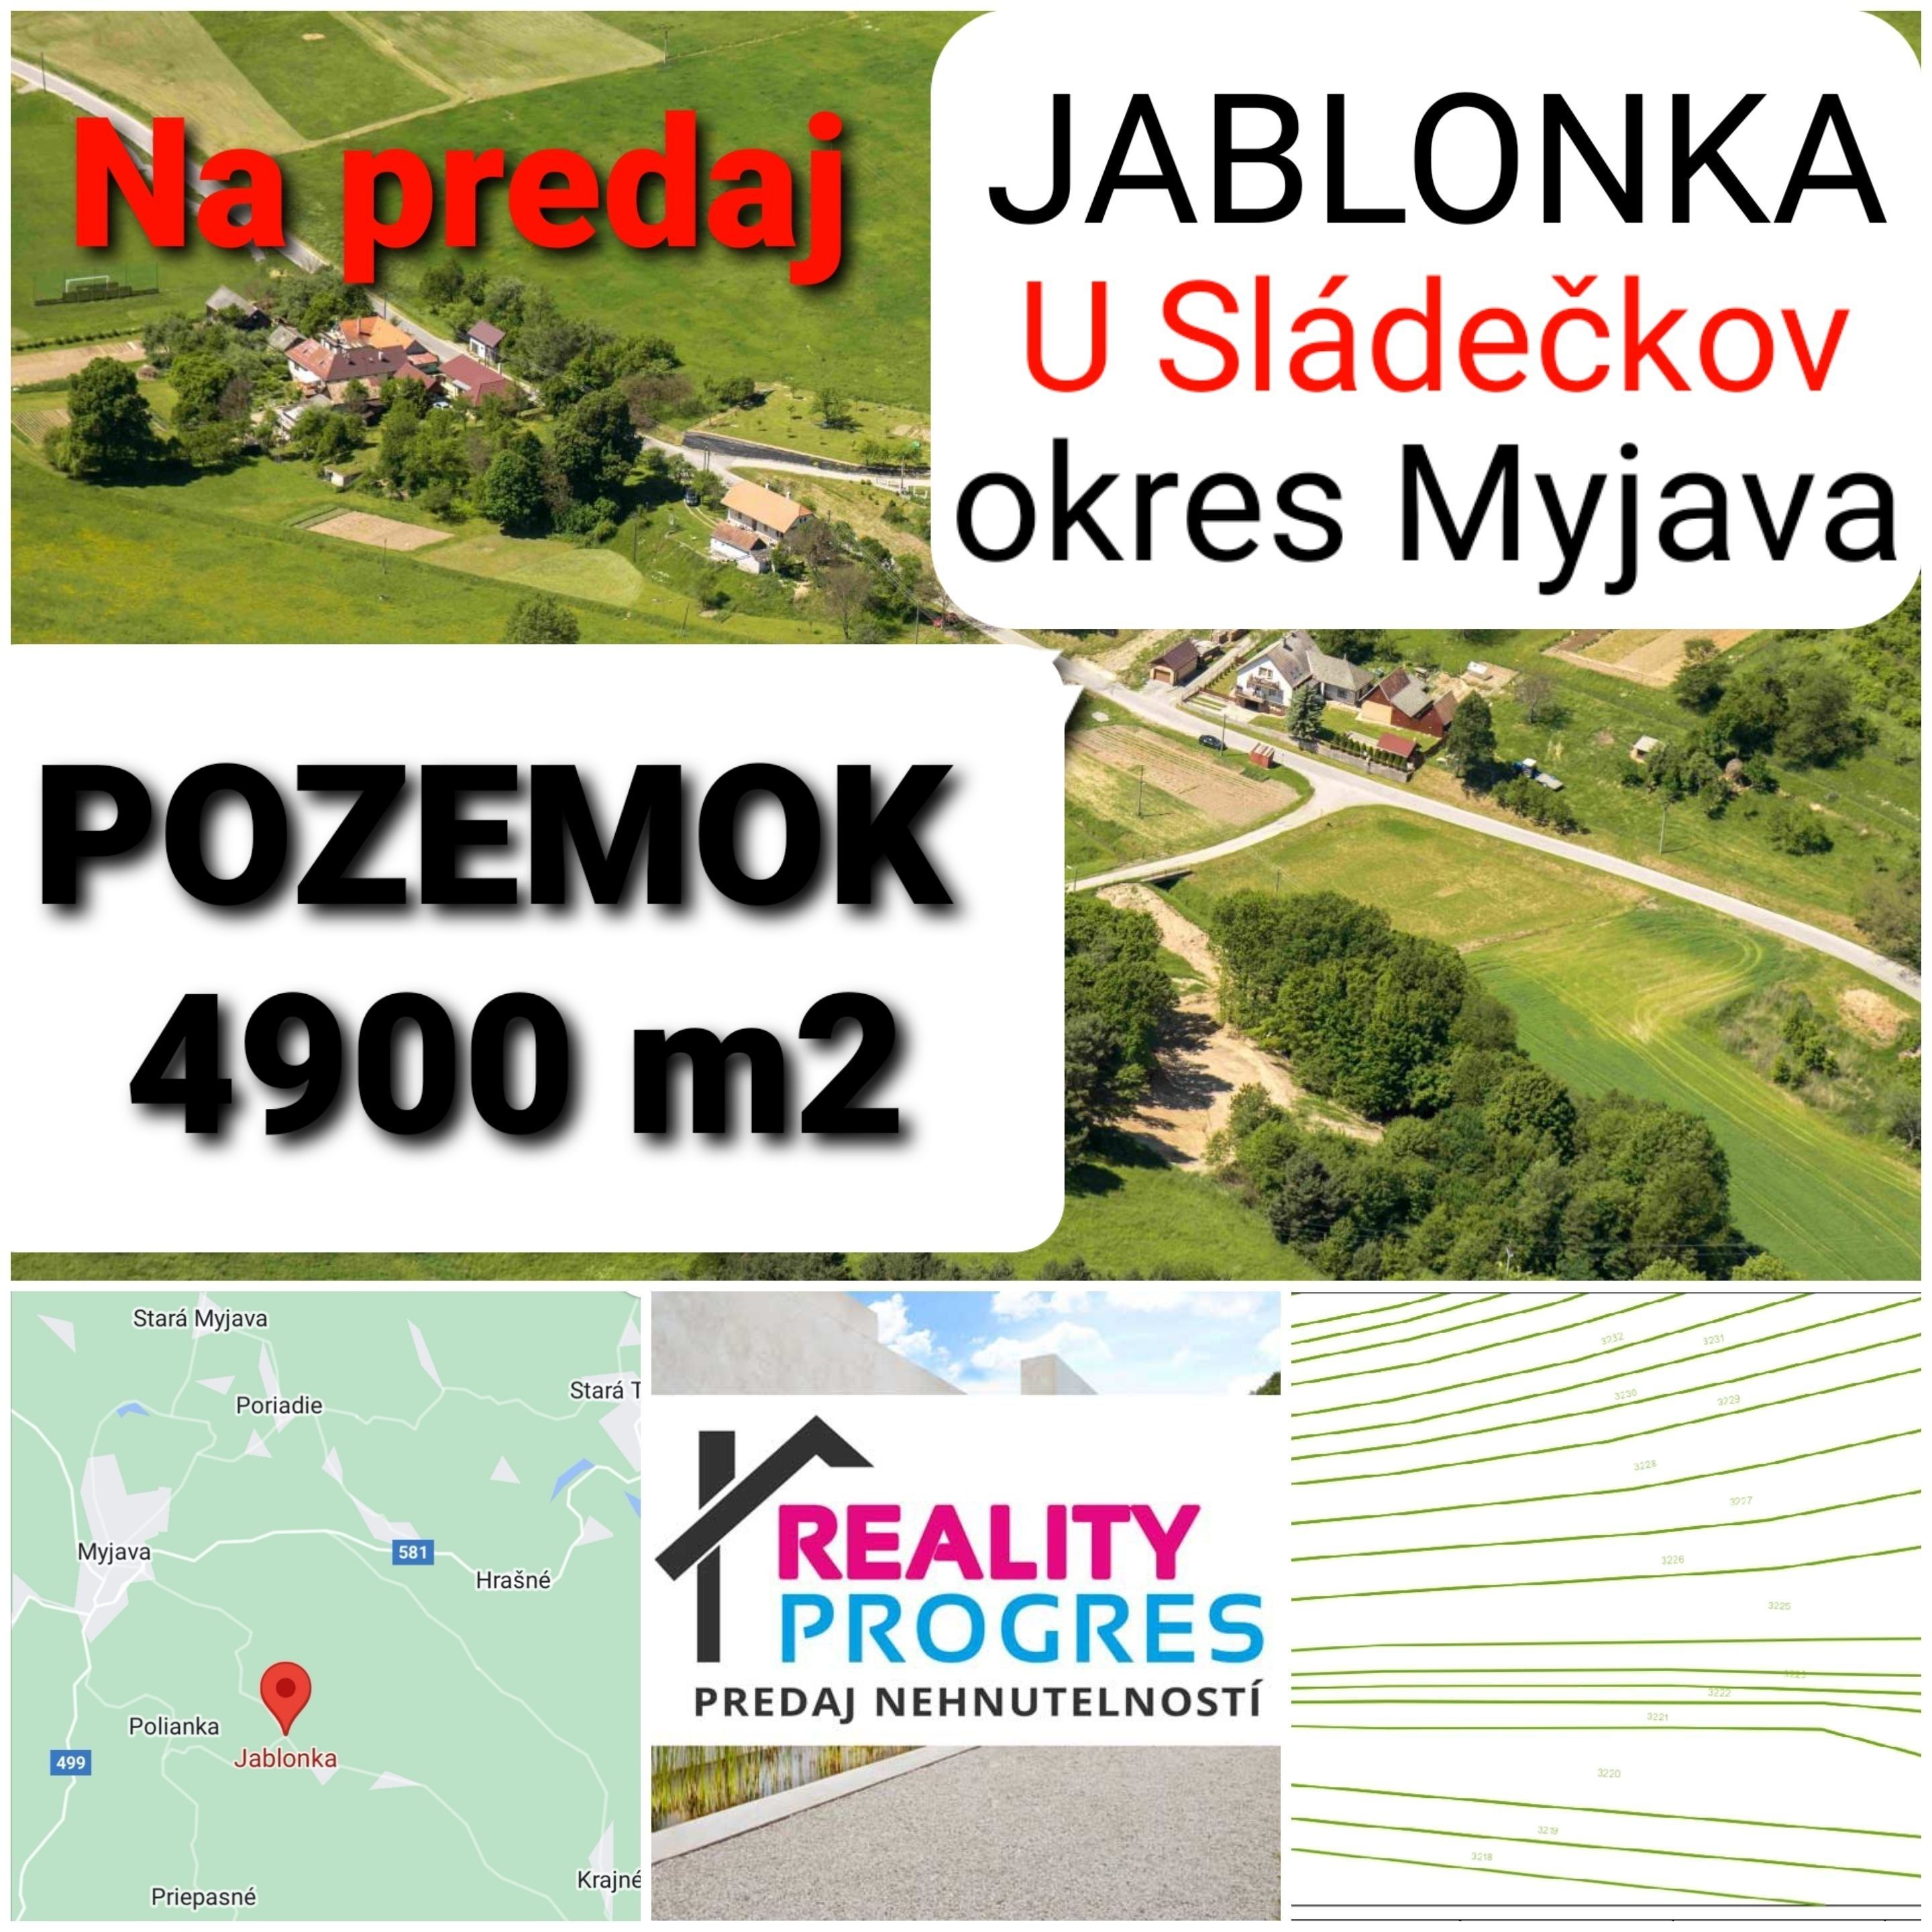 znizena_cena_reality_progres_ponuka_rekreacny_pozemok_4900_m2_jablonka_cast_u_sladeckov___myjava_foto_1